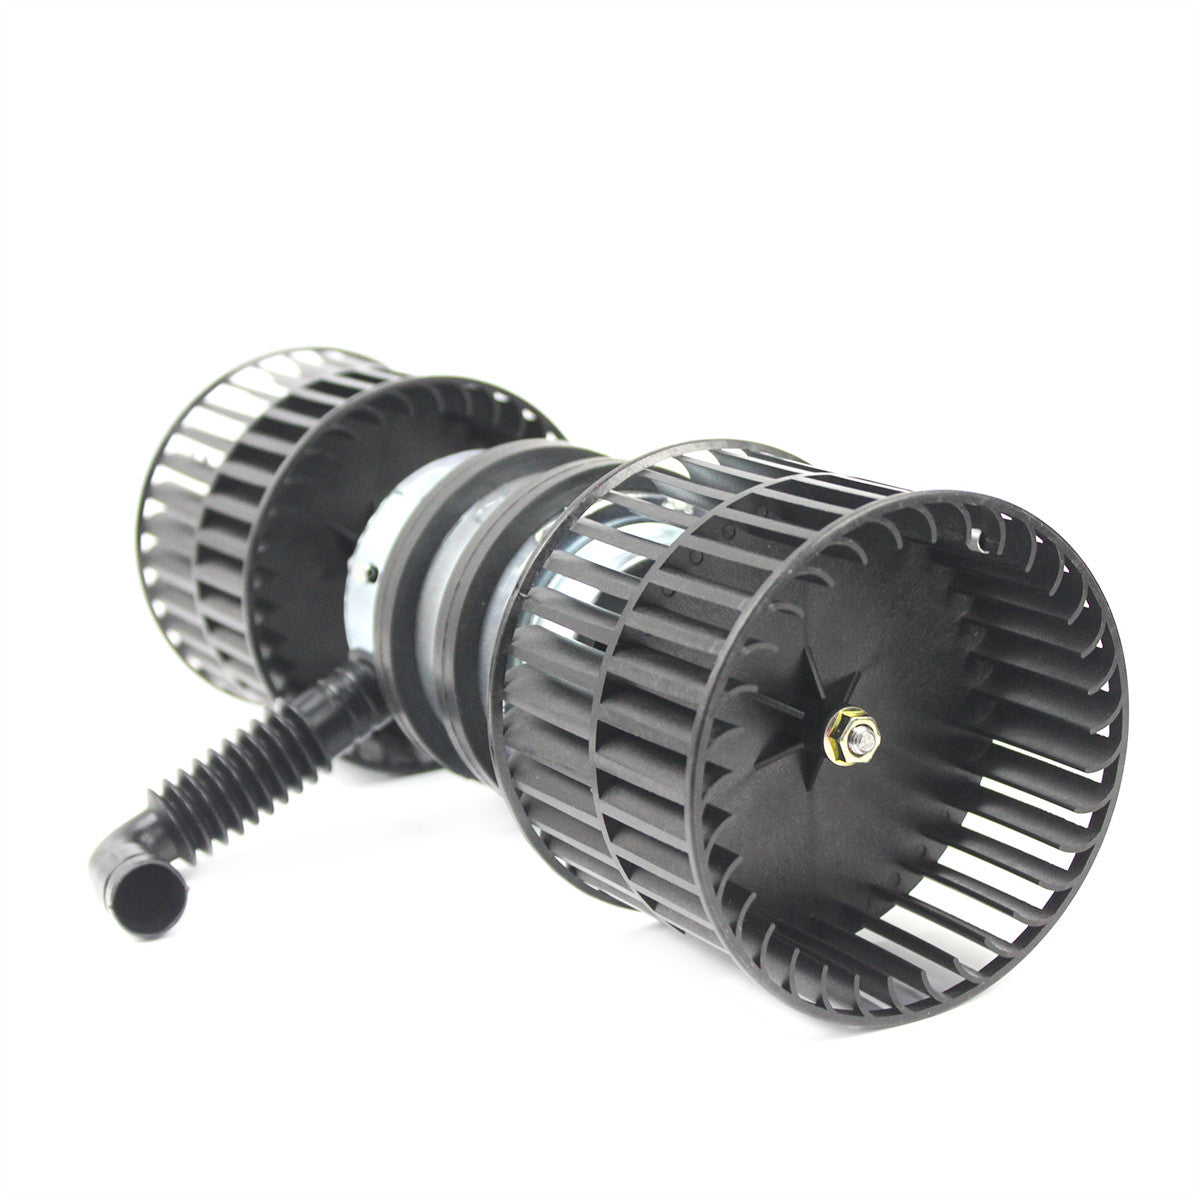 YN20M00107S111 Electric Blower Motor for Kobelco Excavator SK350-8 - Sinocmp